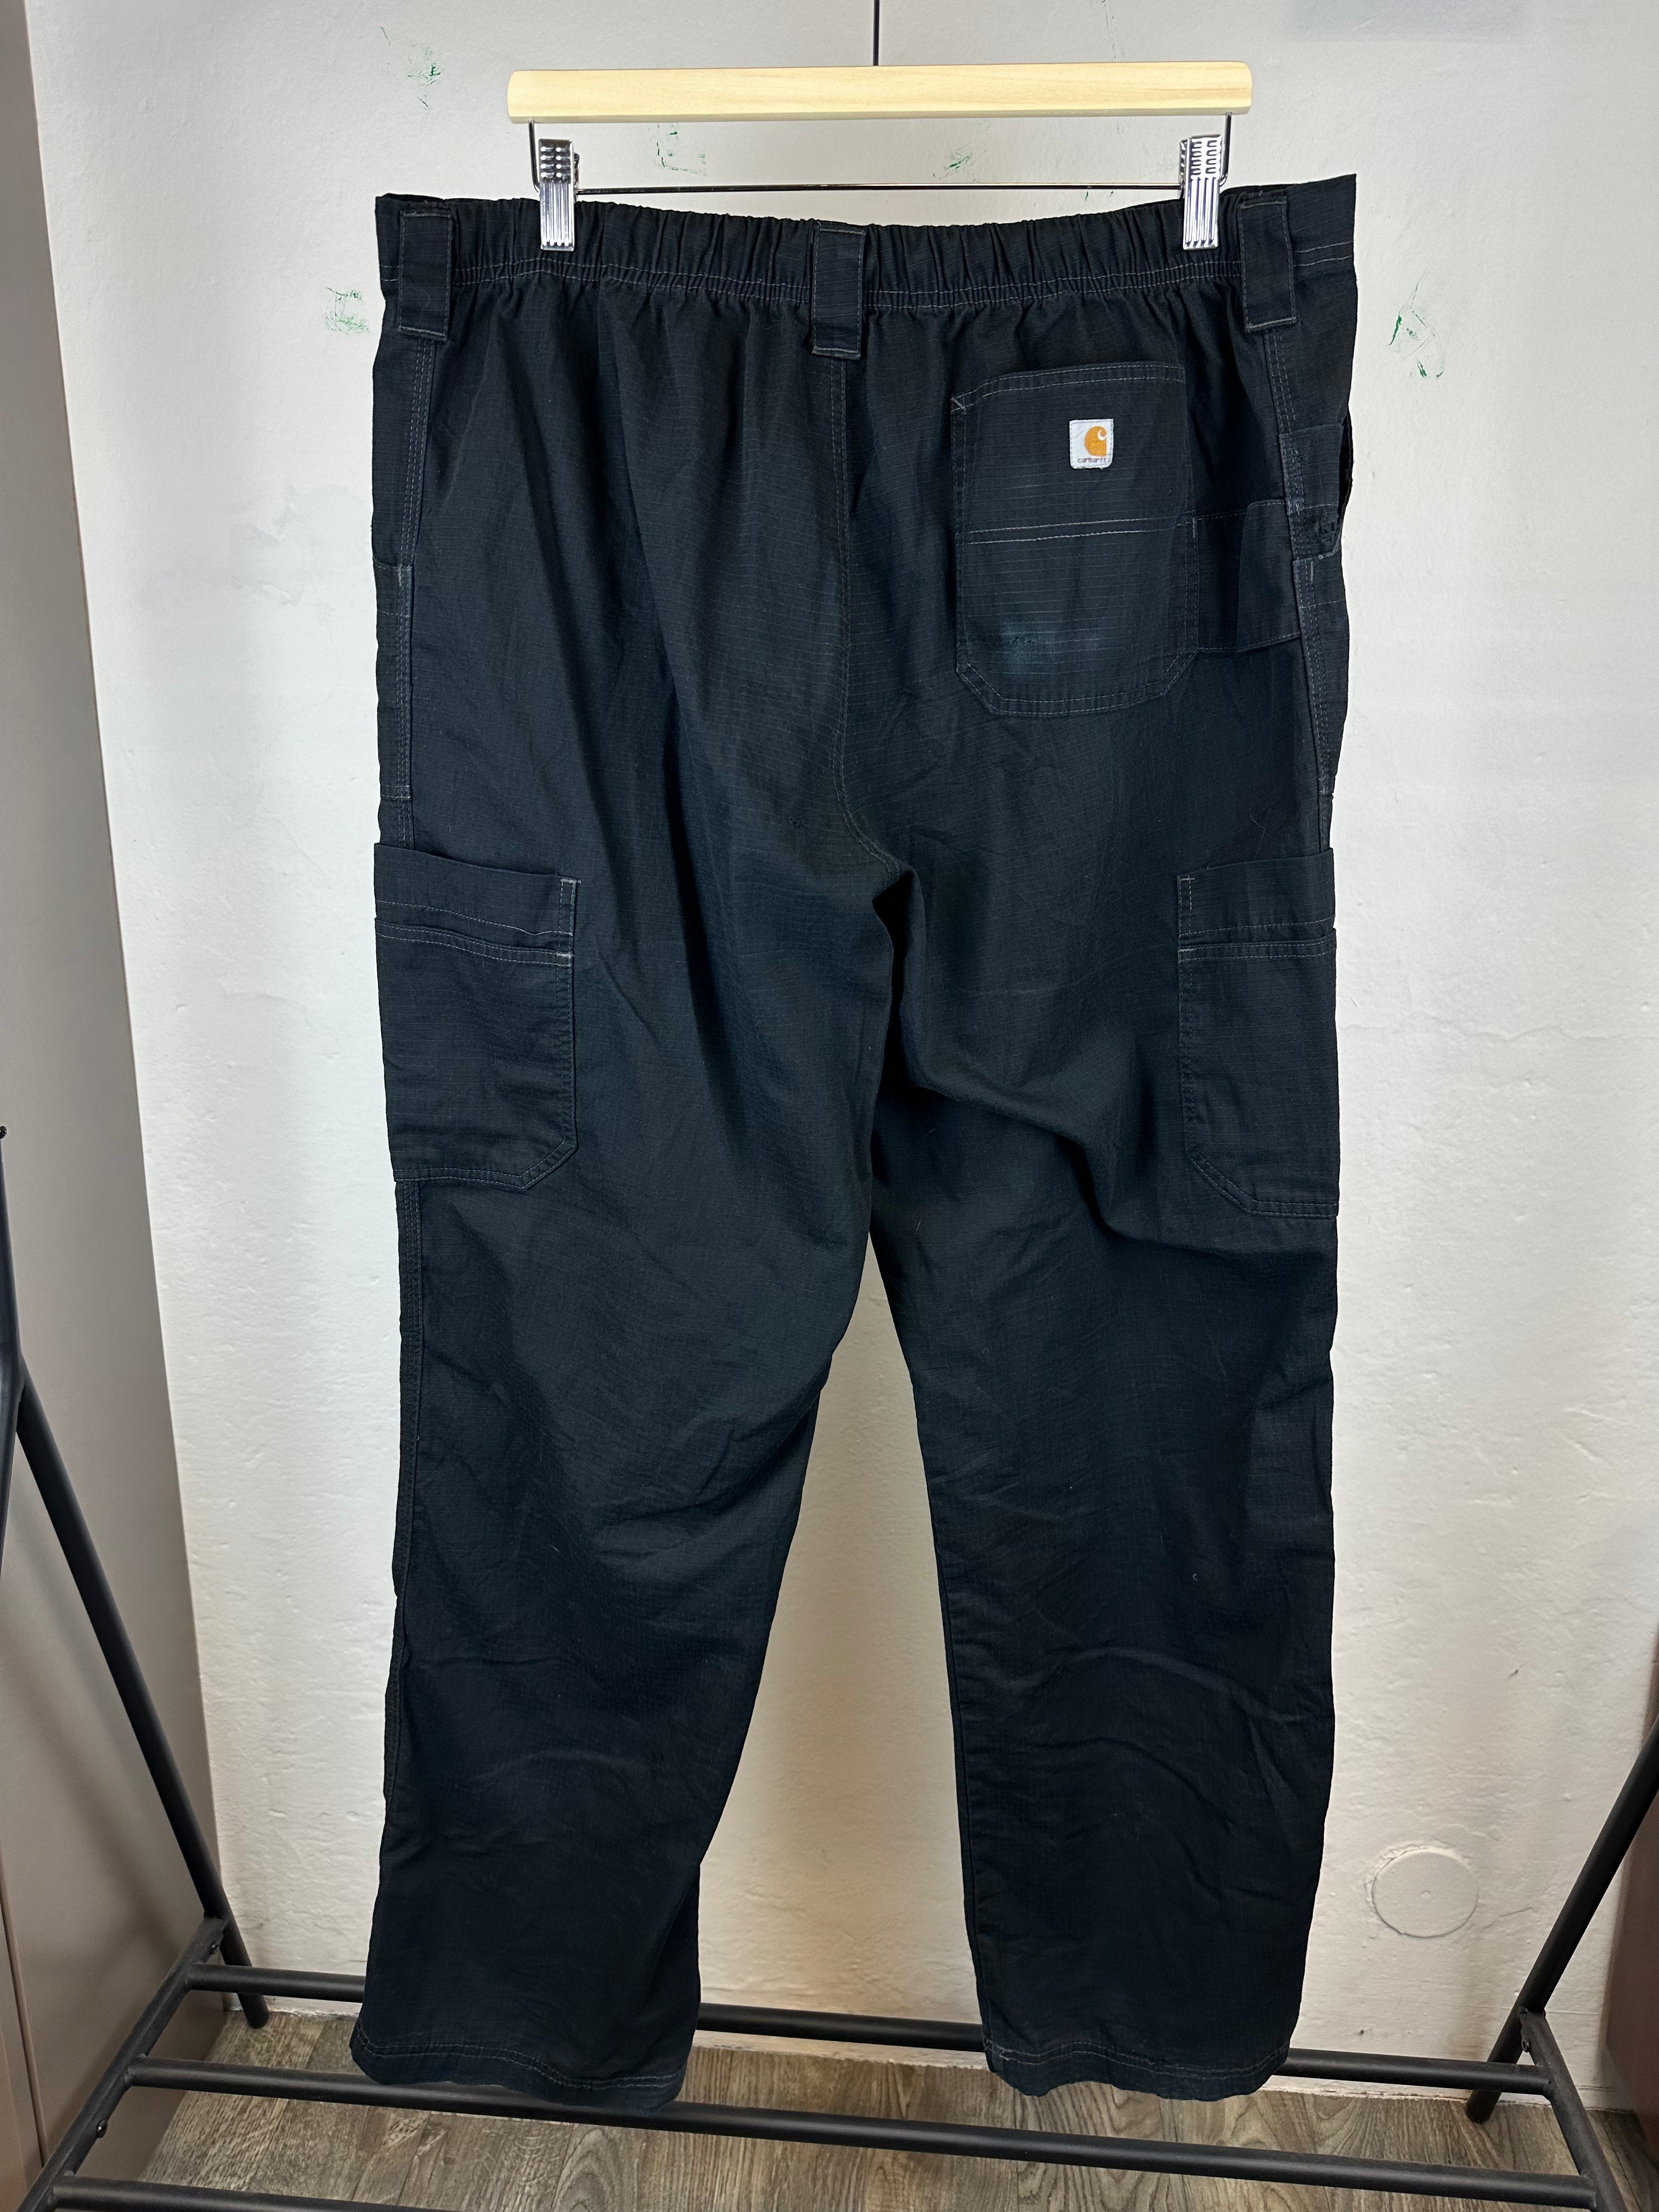 Vintage Carhartt Cargo Pants - size 38